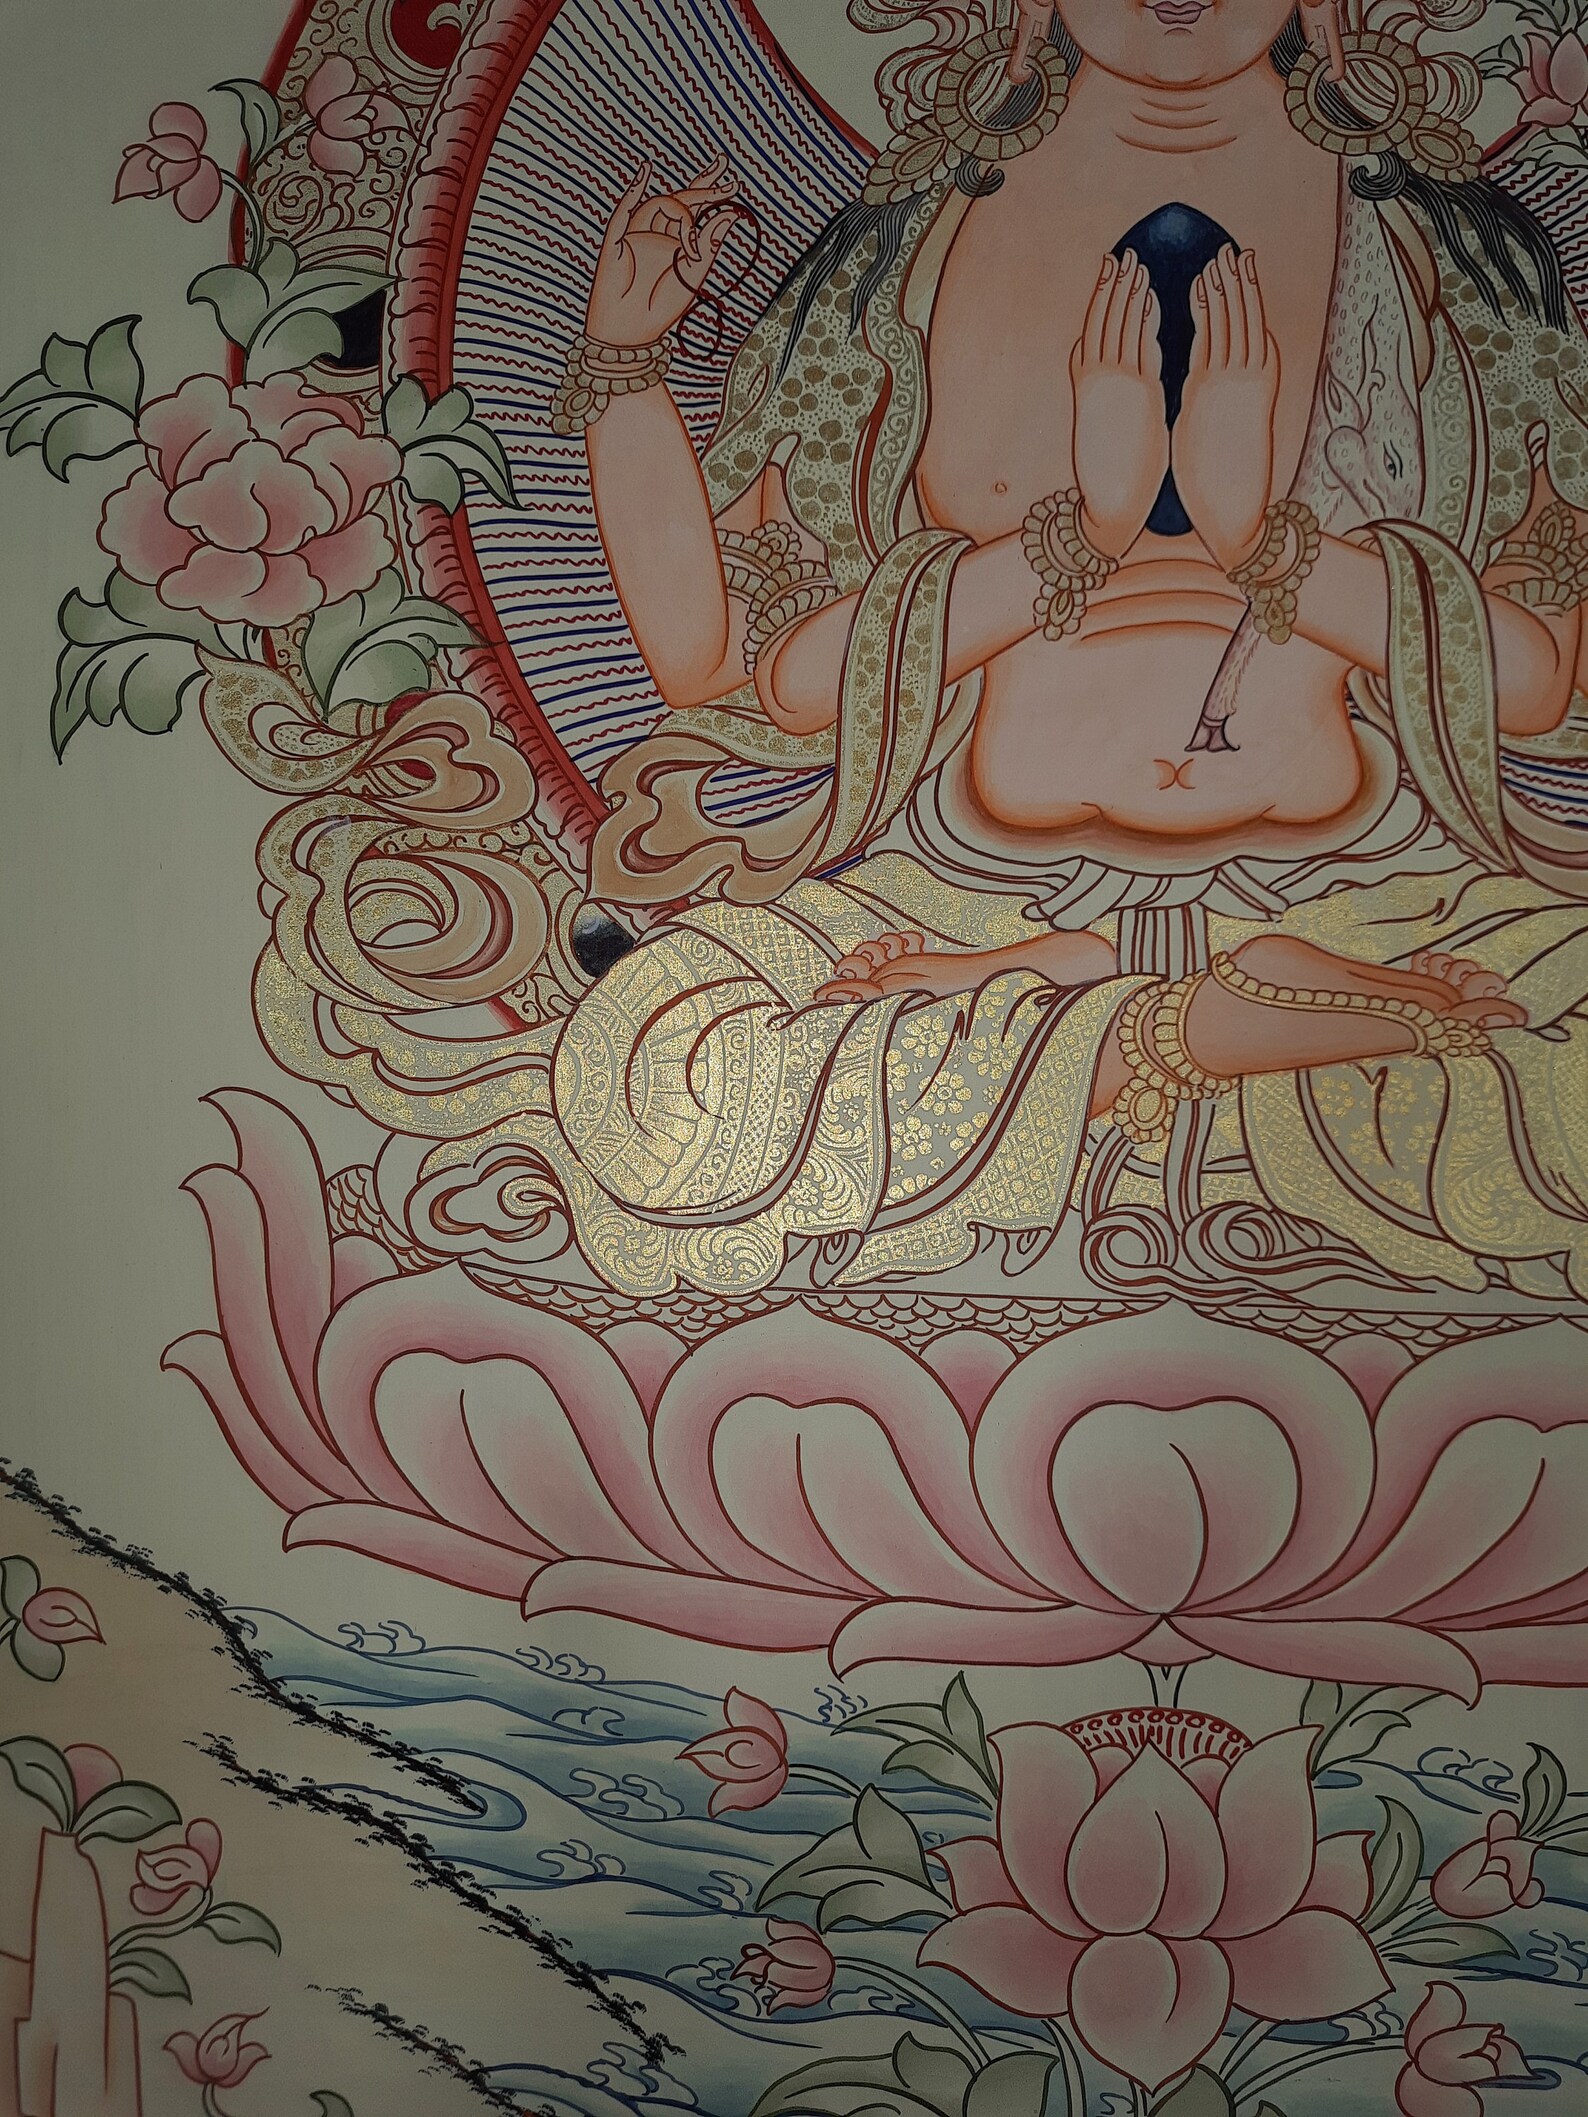 Chenrezig Masterpiece Hand-Painted Tibetan Thangka Painting